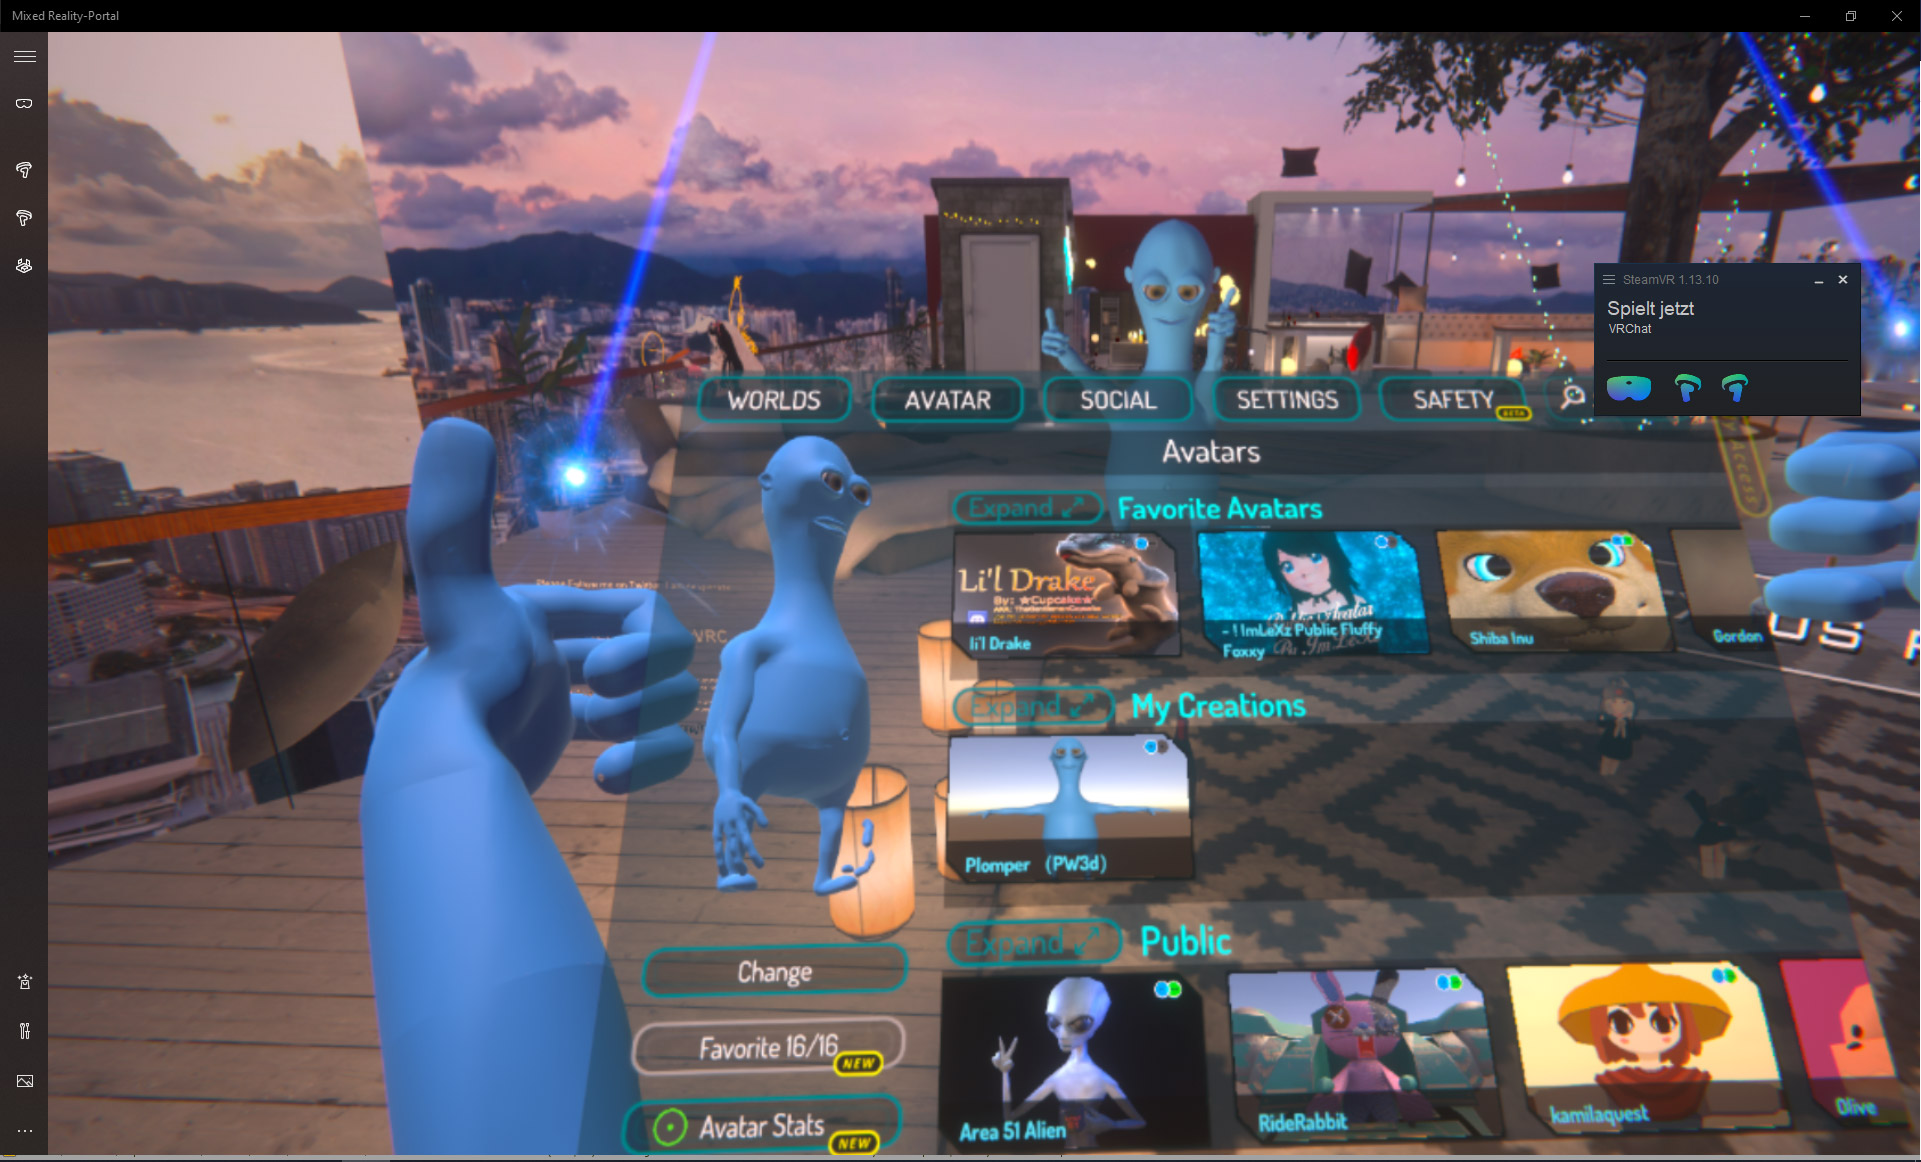 Das PatchWork3d Plumper Monster in VRChat als Character